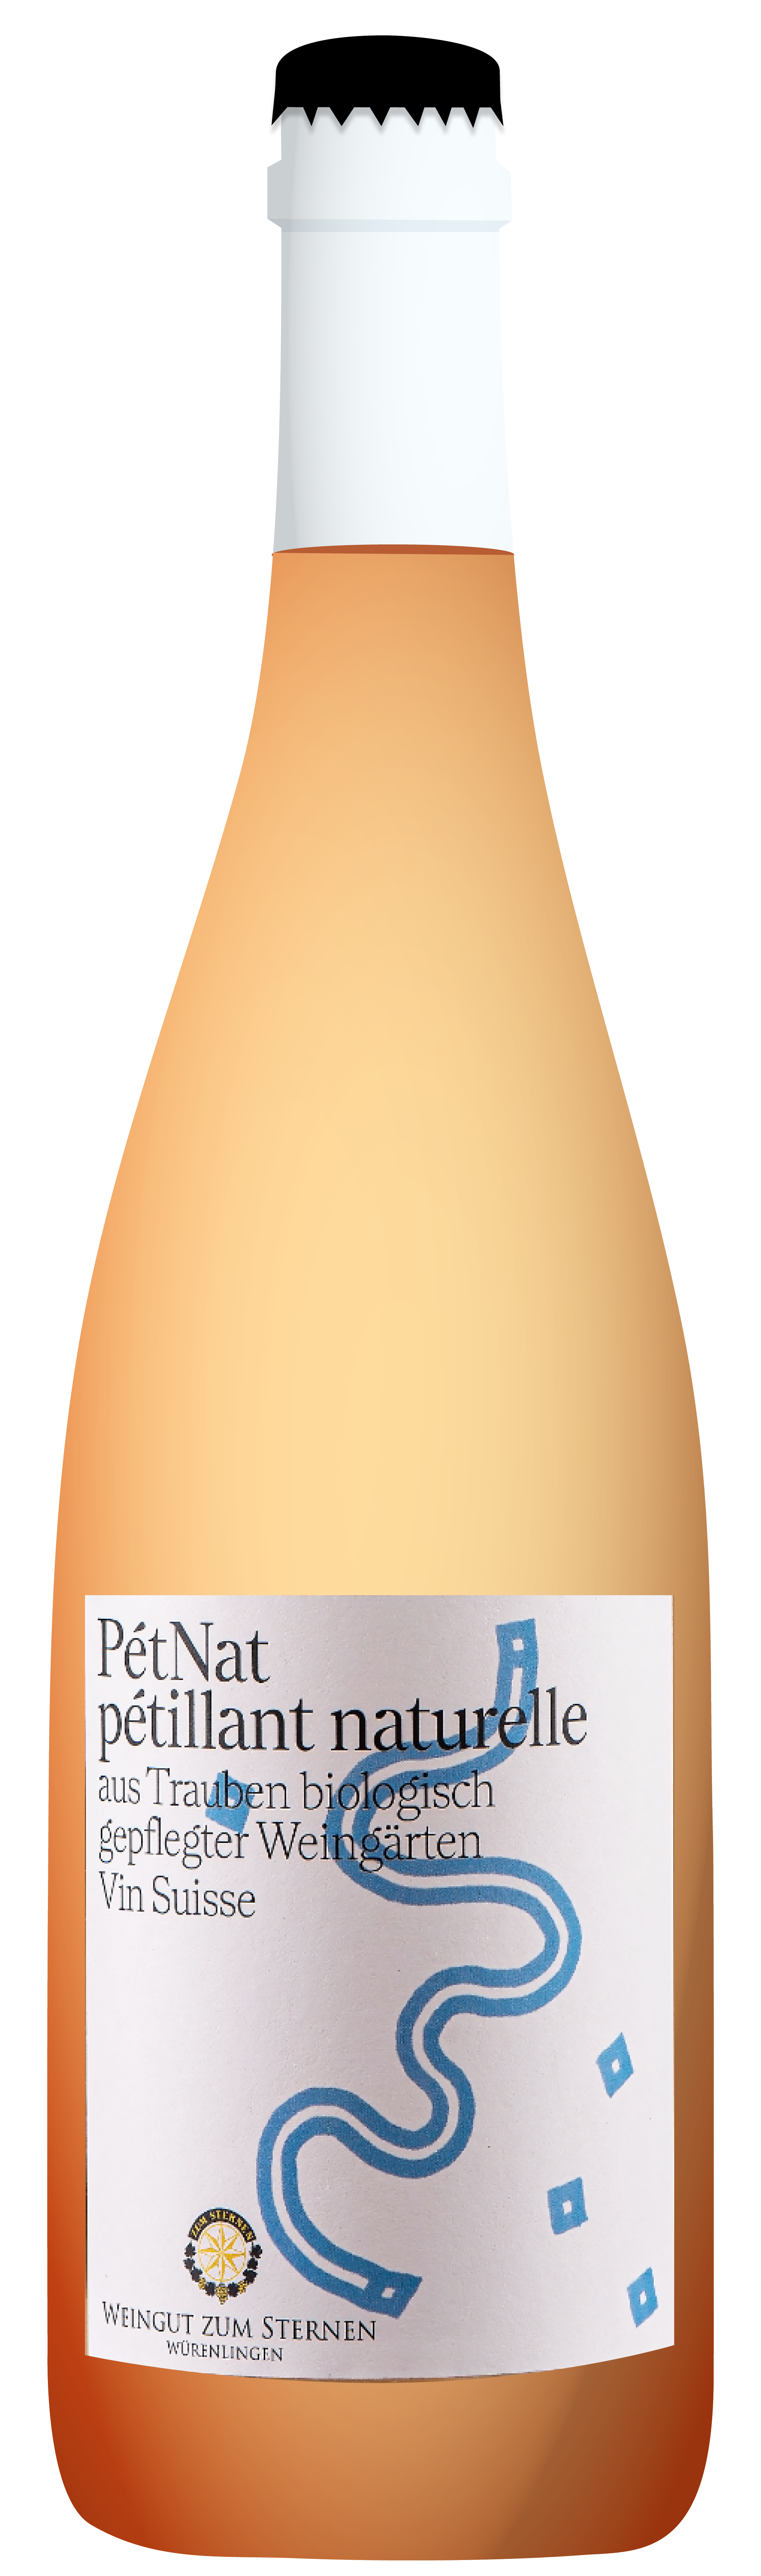 the natural wine company club november 2020 switzerland weingut sternen petnat